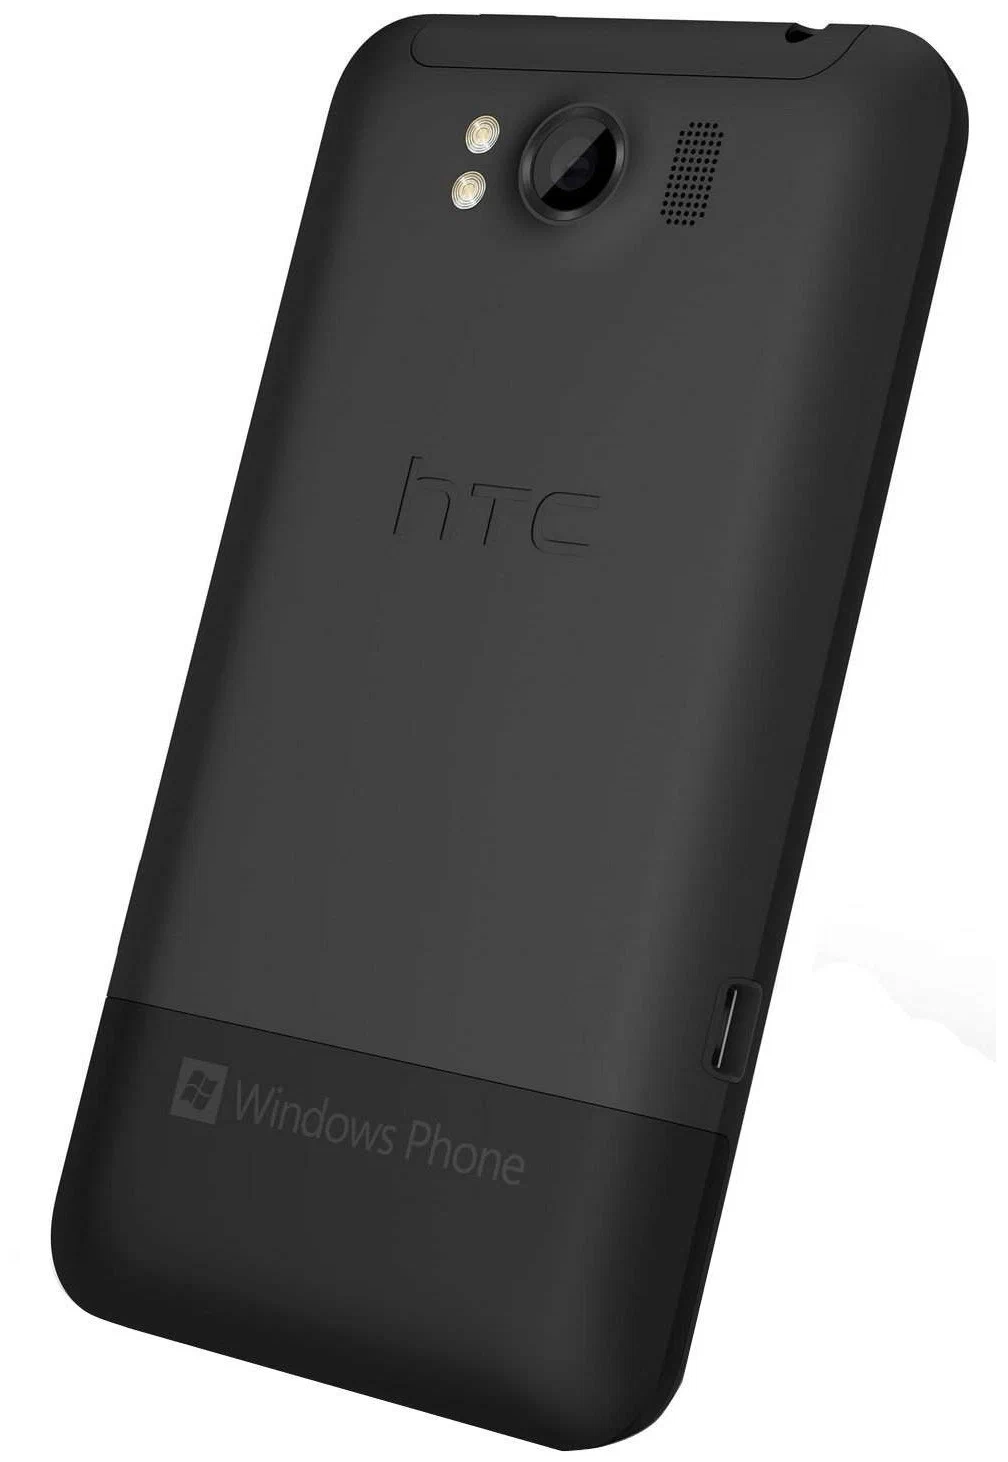 HTC Titan - камера: 8 МП